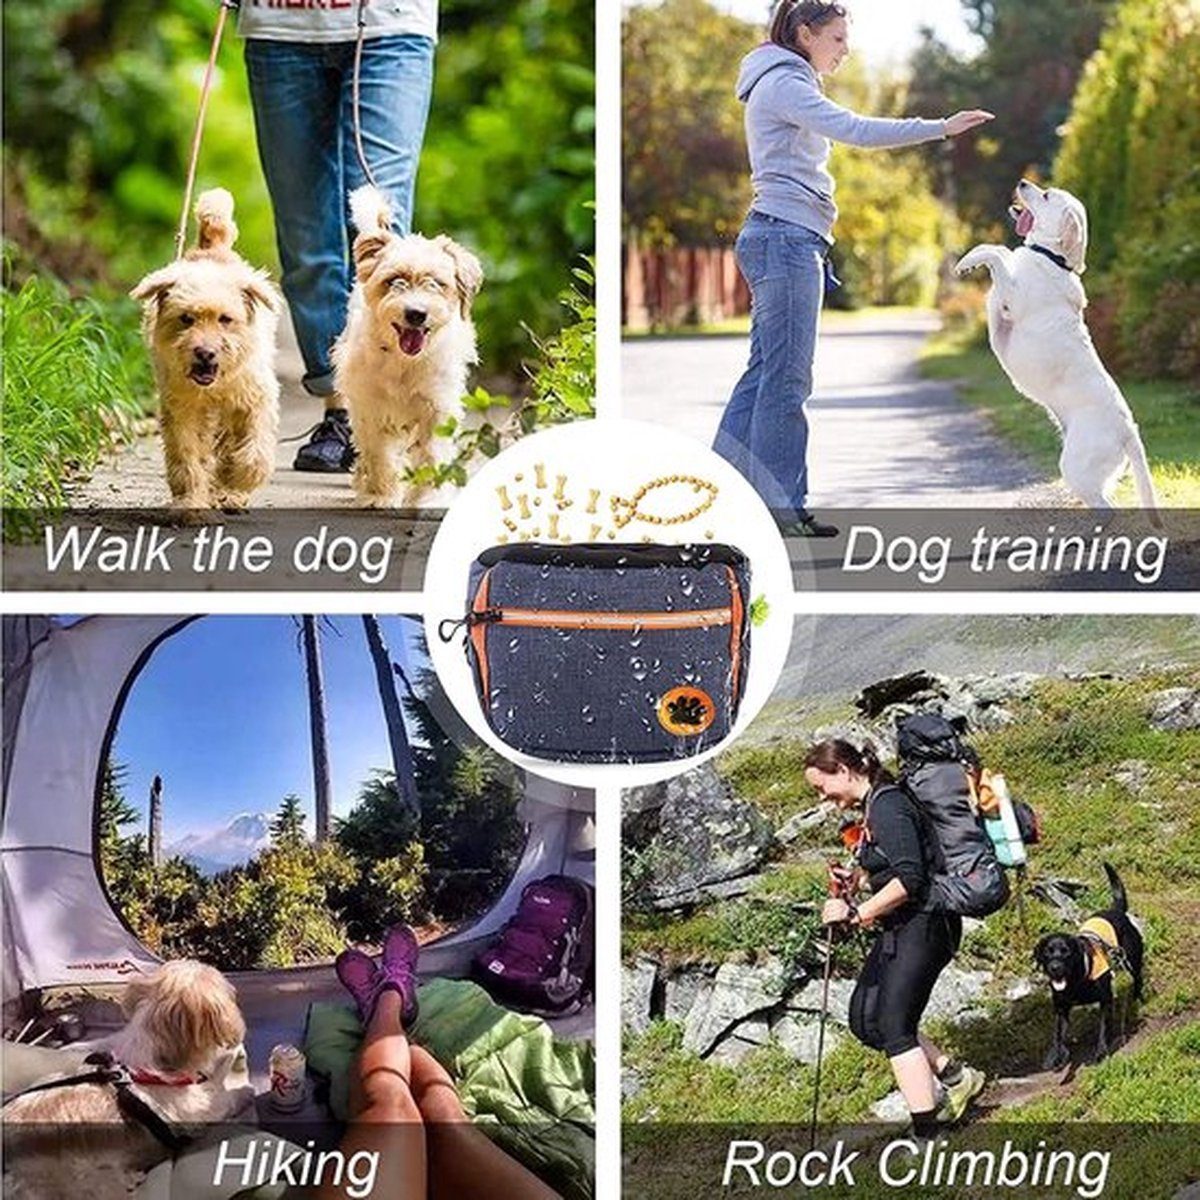 schwarz leicht - - Bag hundefutter - hundeausrüstung Hundetrainingsset, tragen), Dogs Trainings-pack zu hunde for Sporttasche (Trainingstasche, für BOTC hundetrainings-tasche Reward